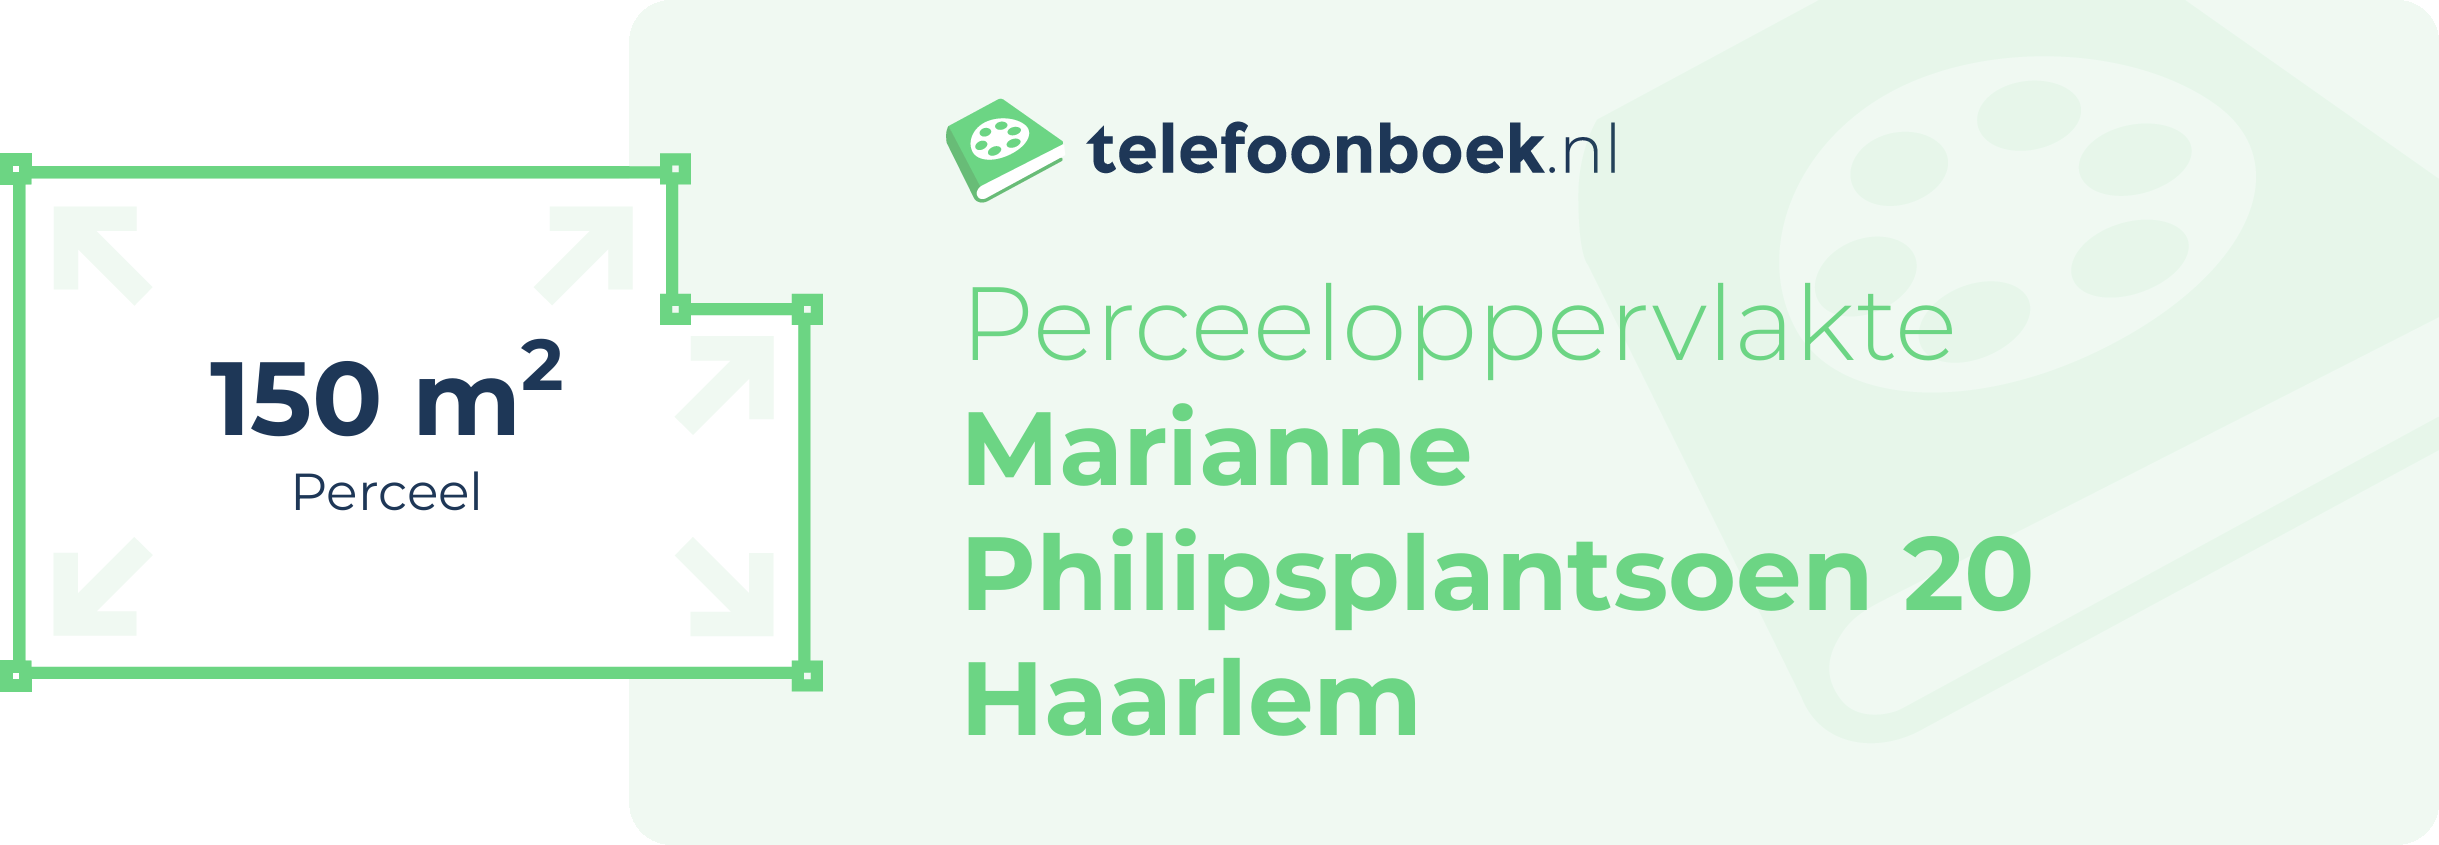 Perceeloppervlakte Marianne Philipsplantsoen 20 Haarlem